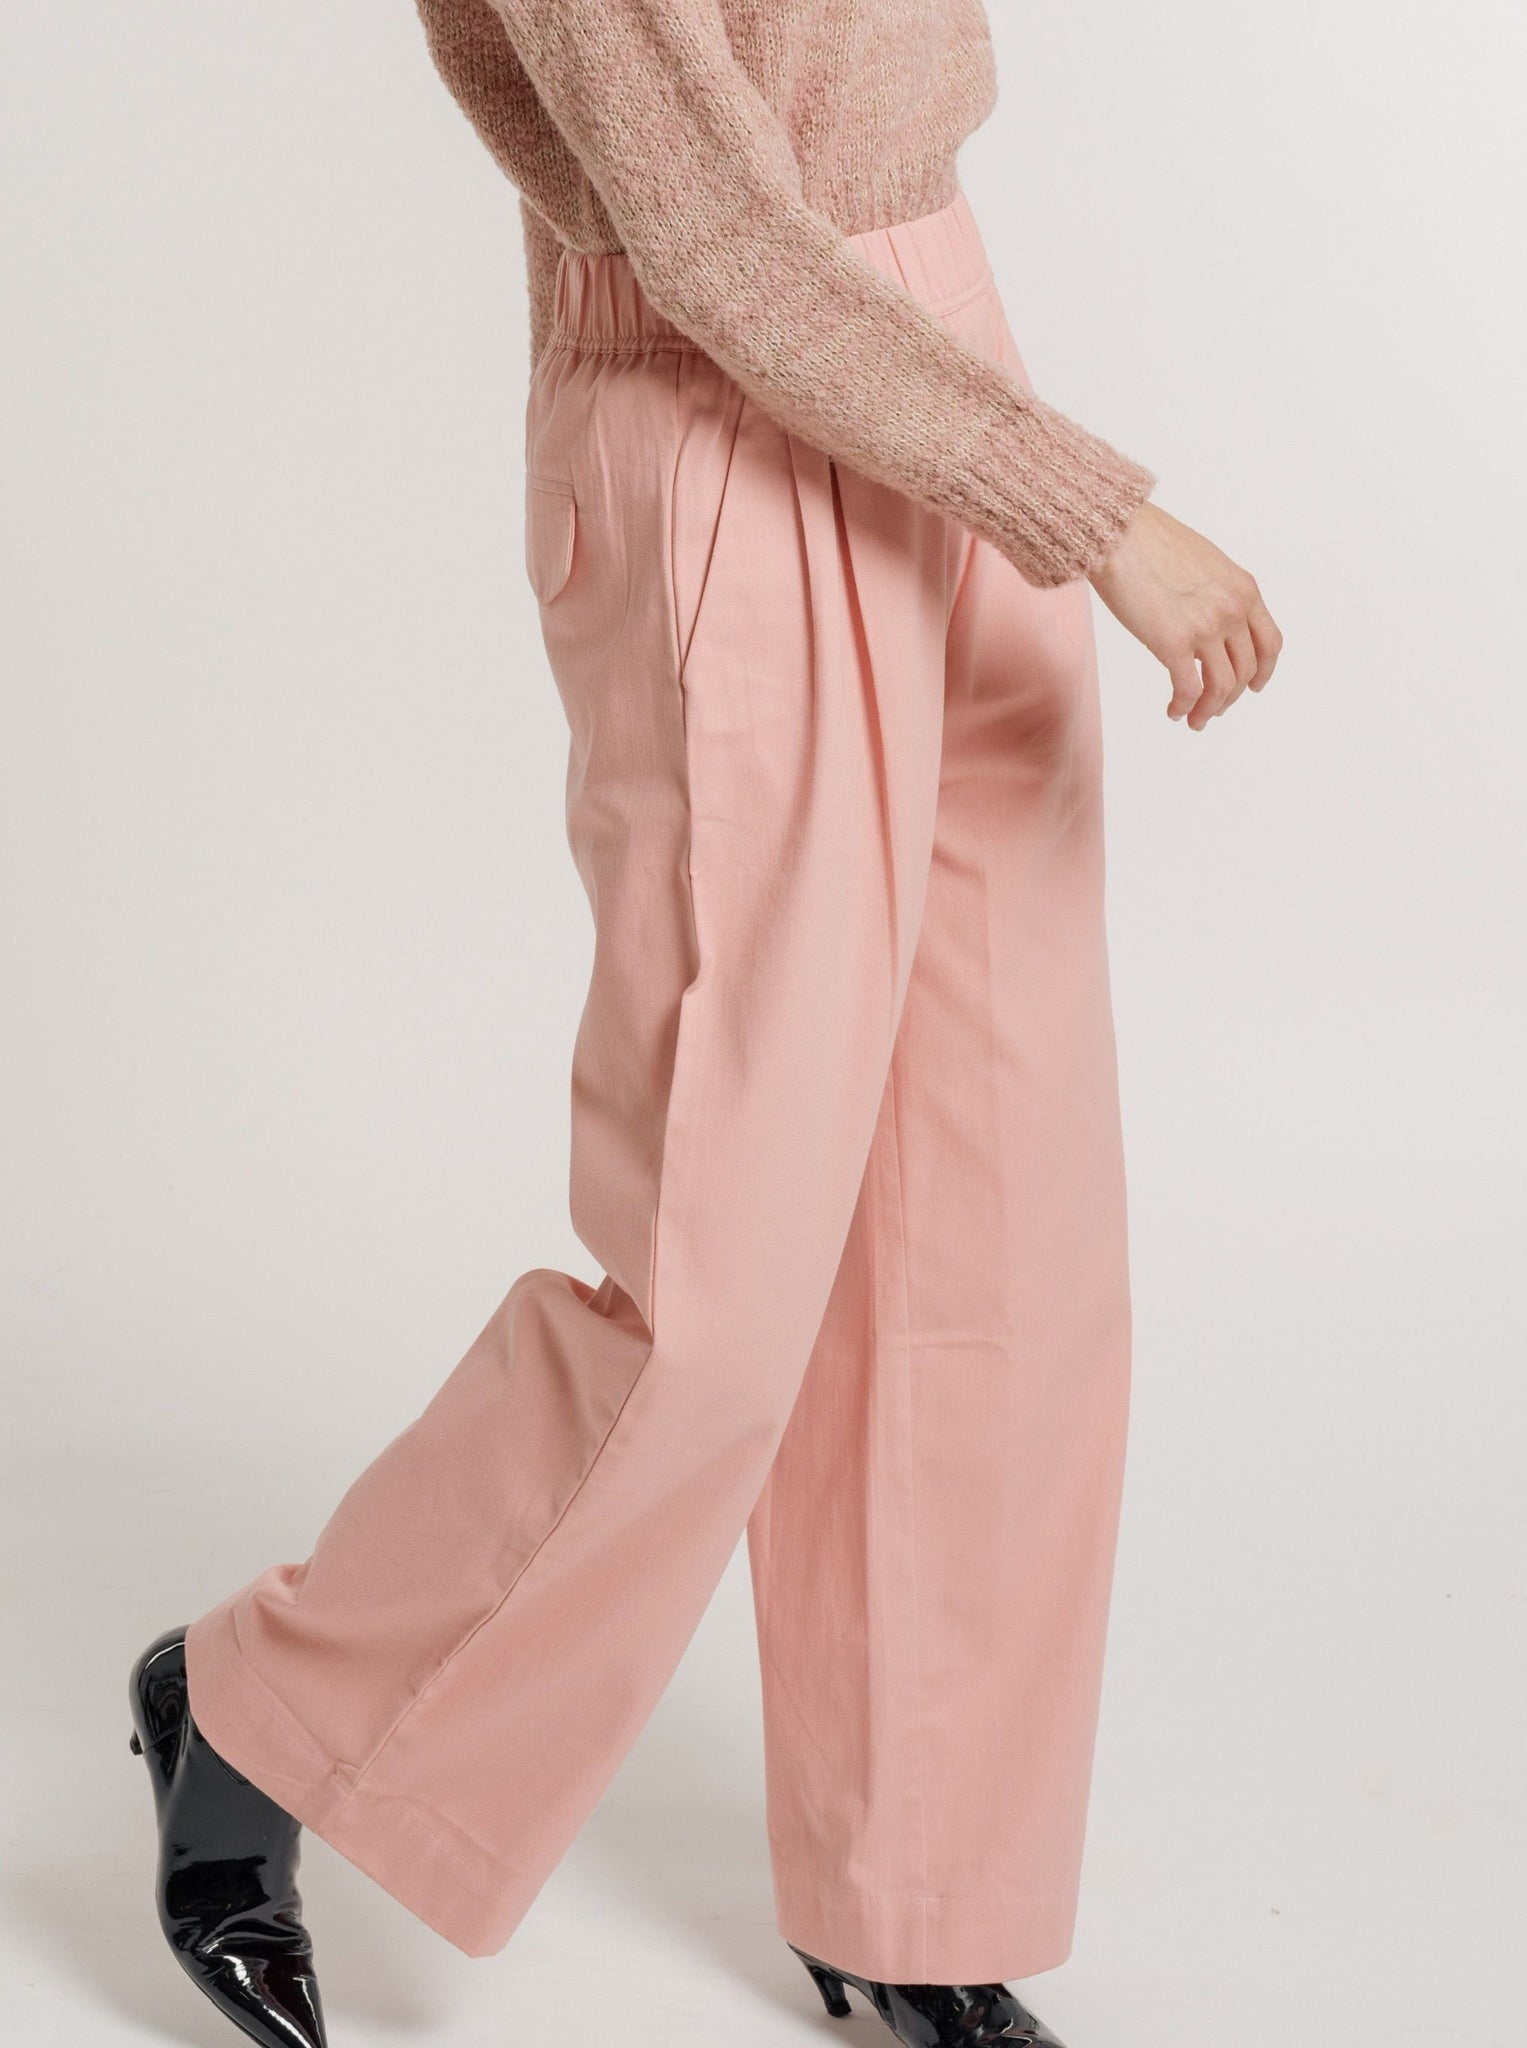 Hepburn Trouser - Pincusion Pink - pre-order